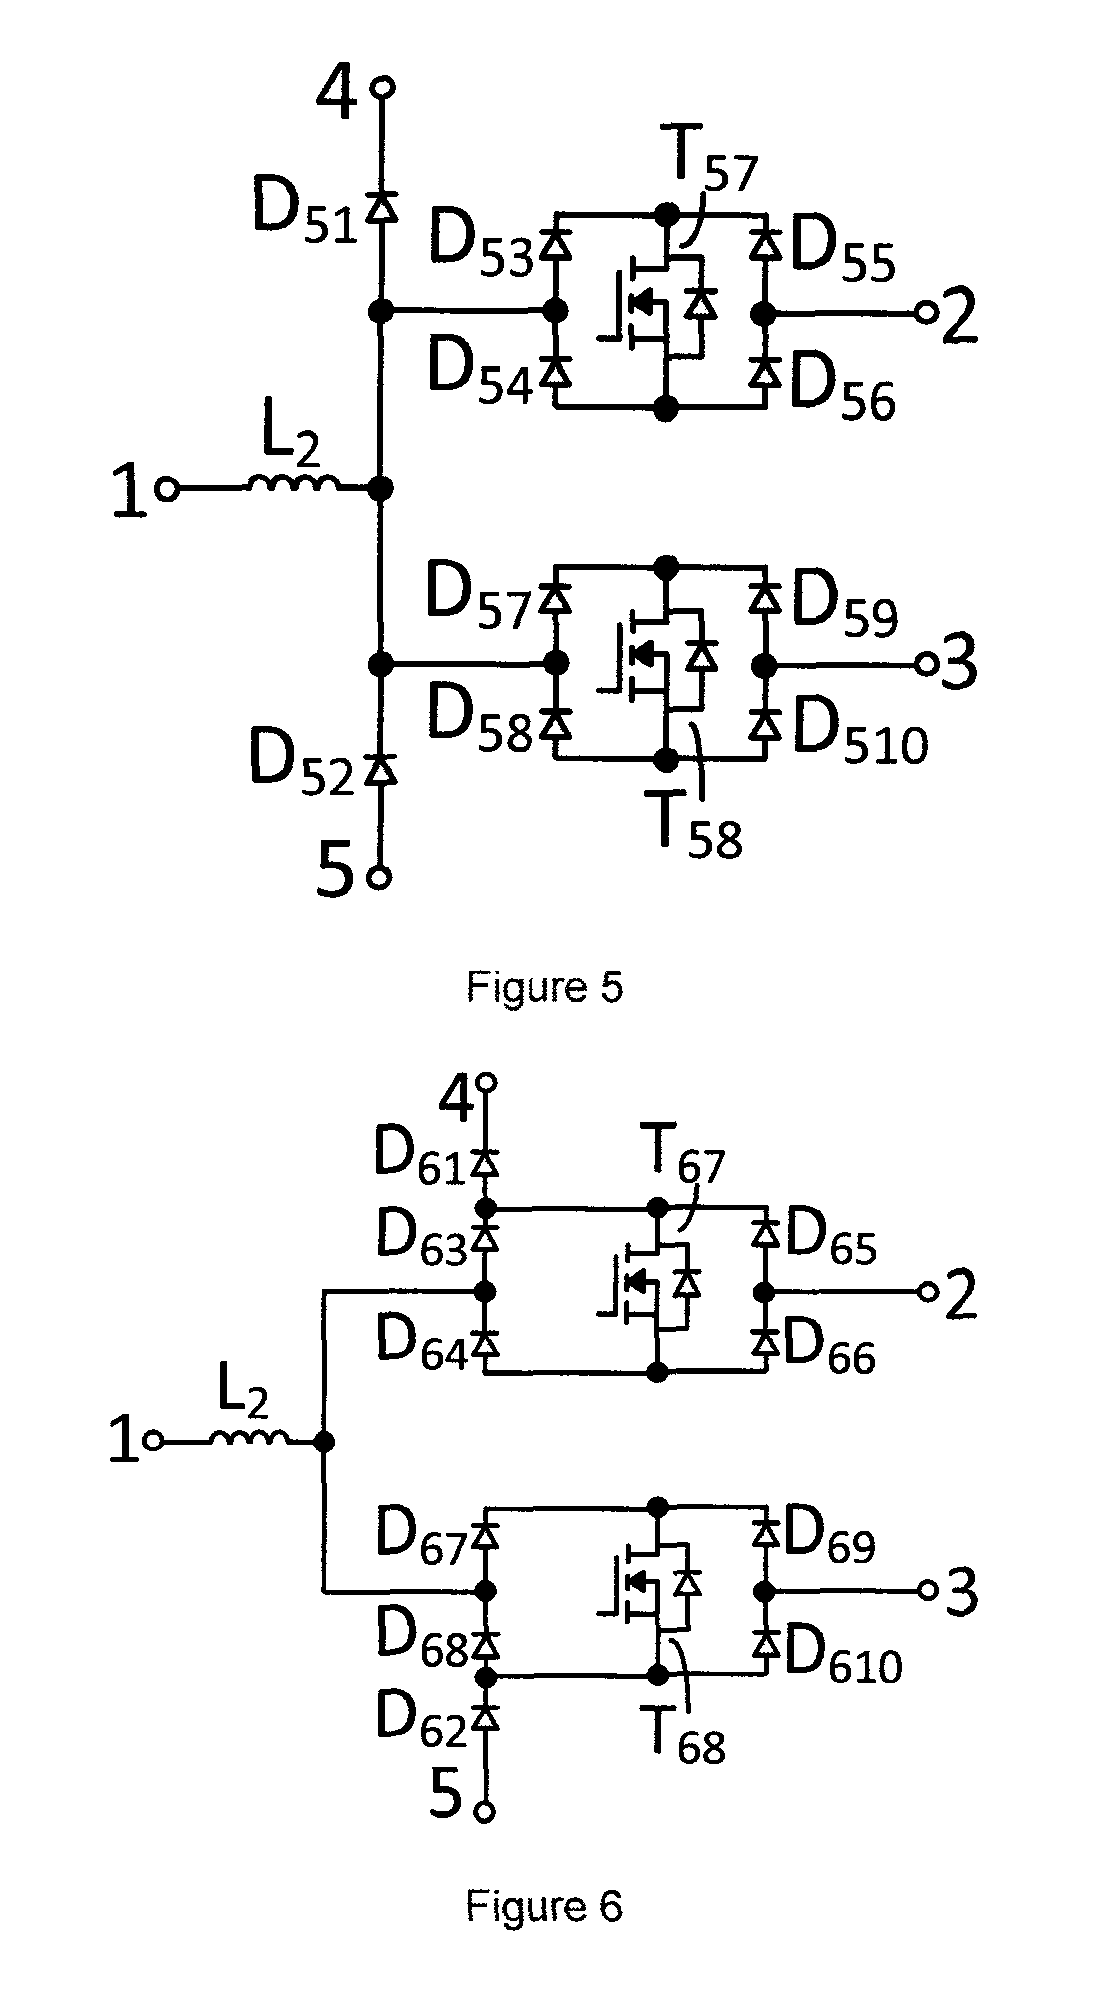 Five-level half bridge inverter topology with high voltage utilization ratio